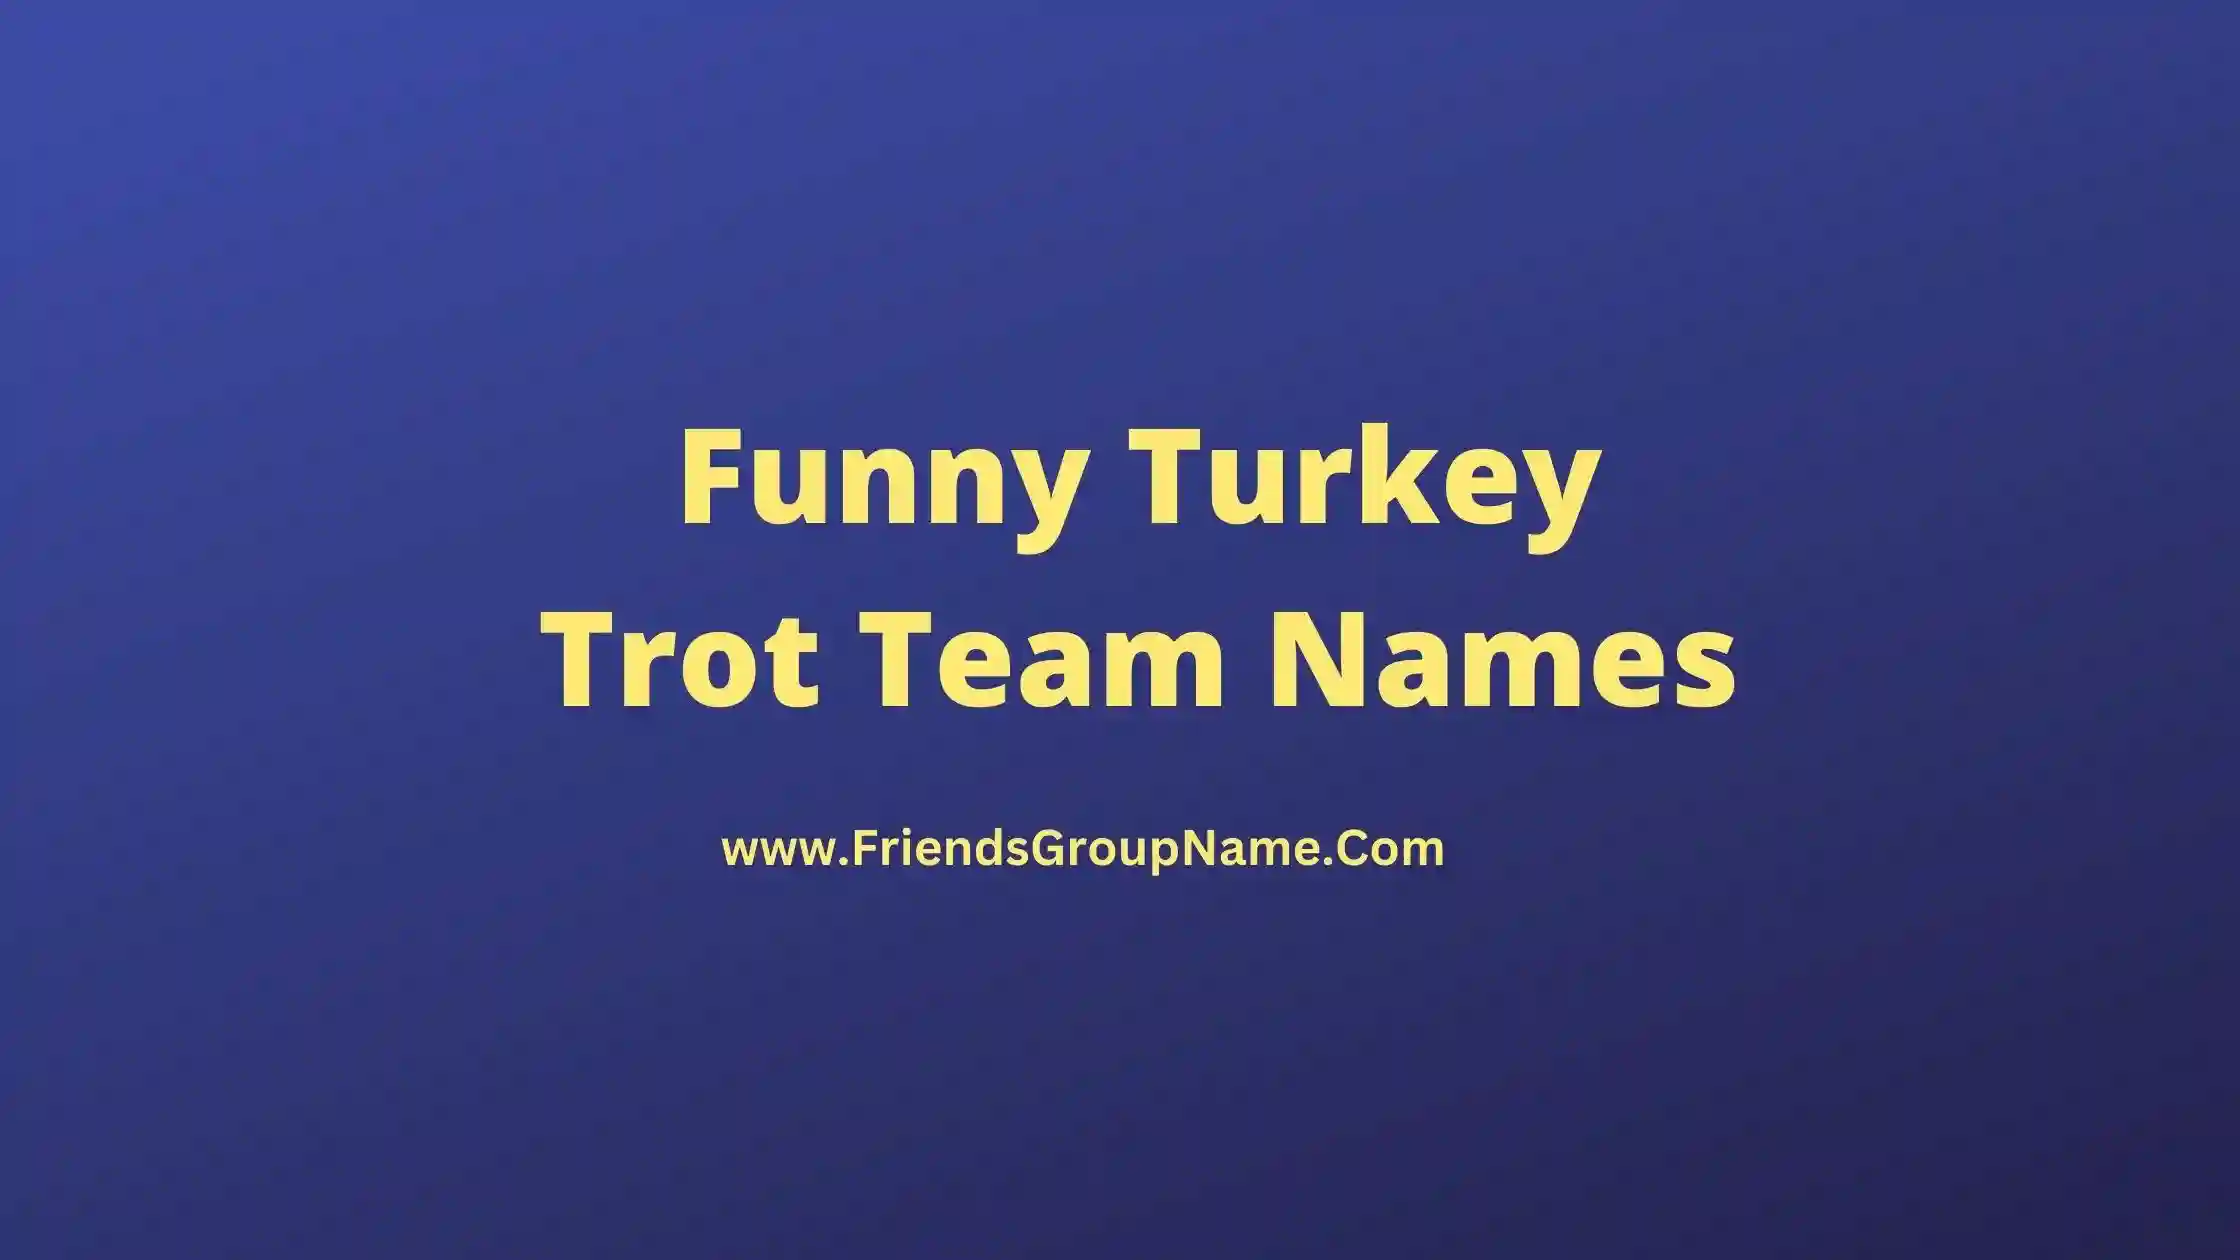 Funny Turkey Trot Team Names